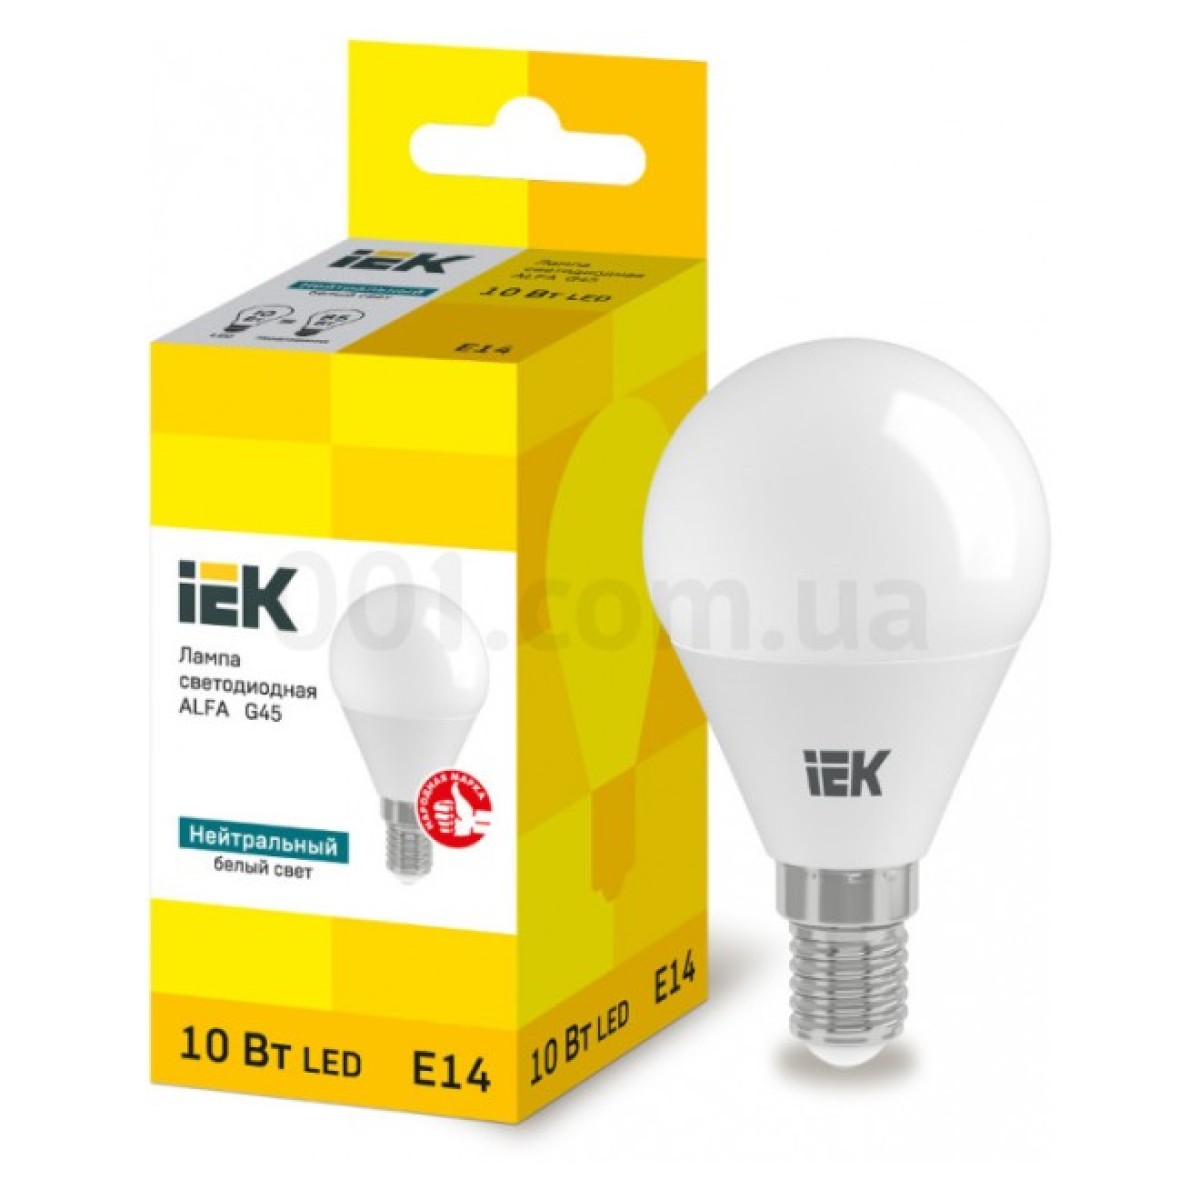 Светодиодная лампа LED ALFA G45 (шар) 10 Вт 230В 4000К E14, IEK 256_256.jpg